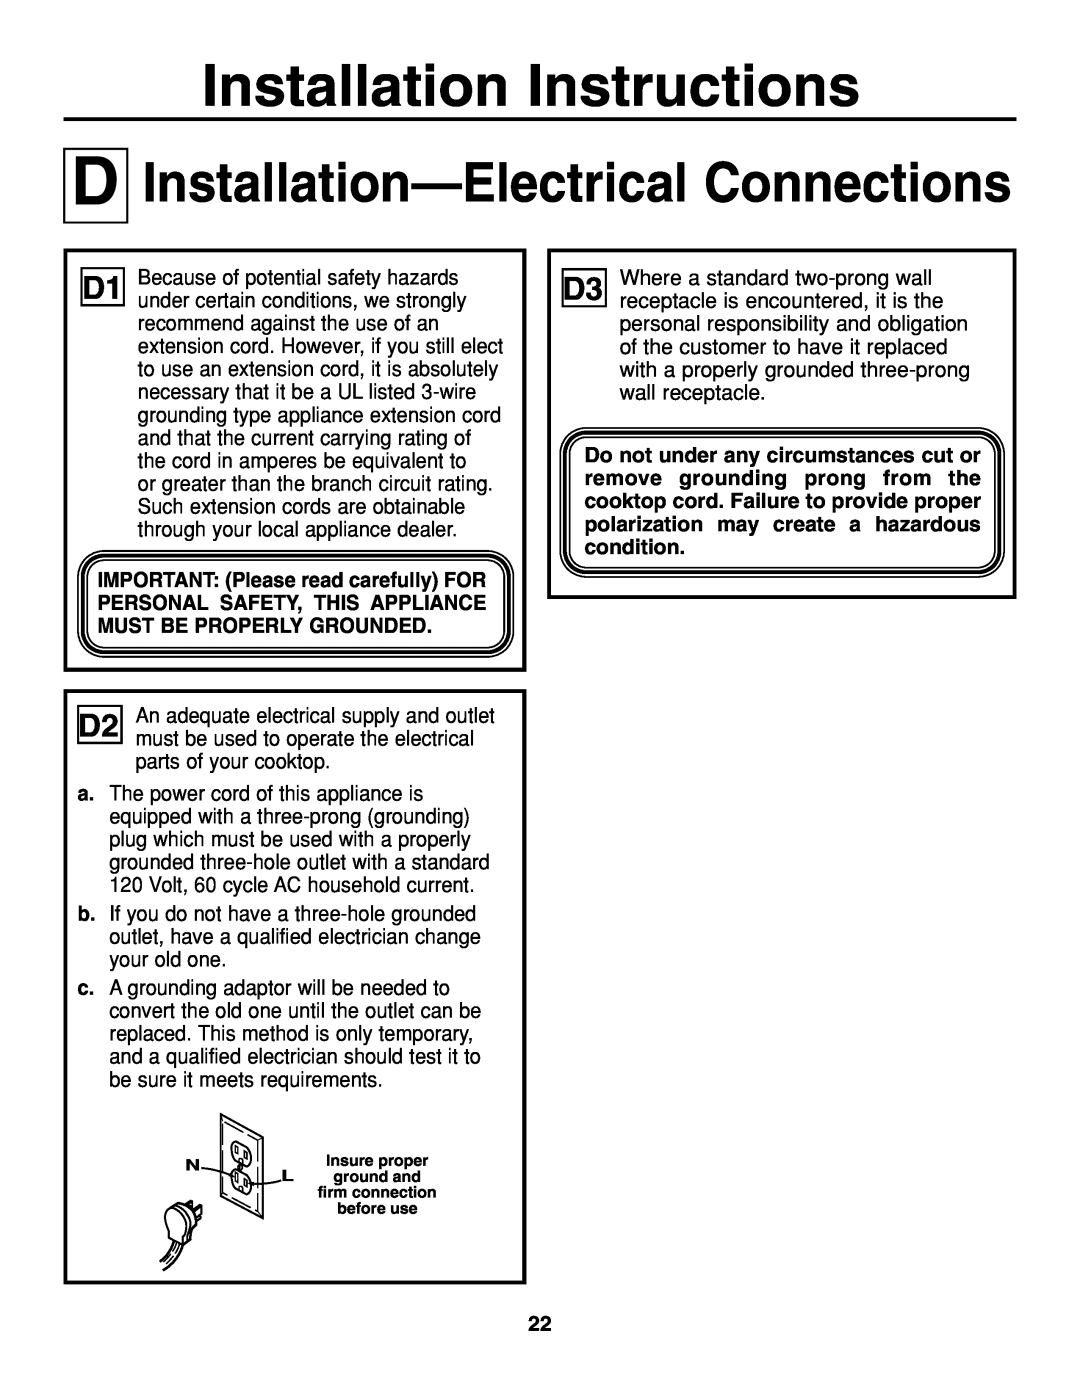 GE JGP637 installation instructions Installation-Electrical Connections, Installation Instructions 